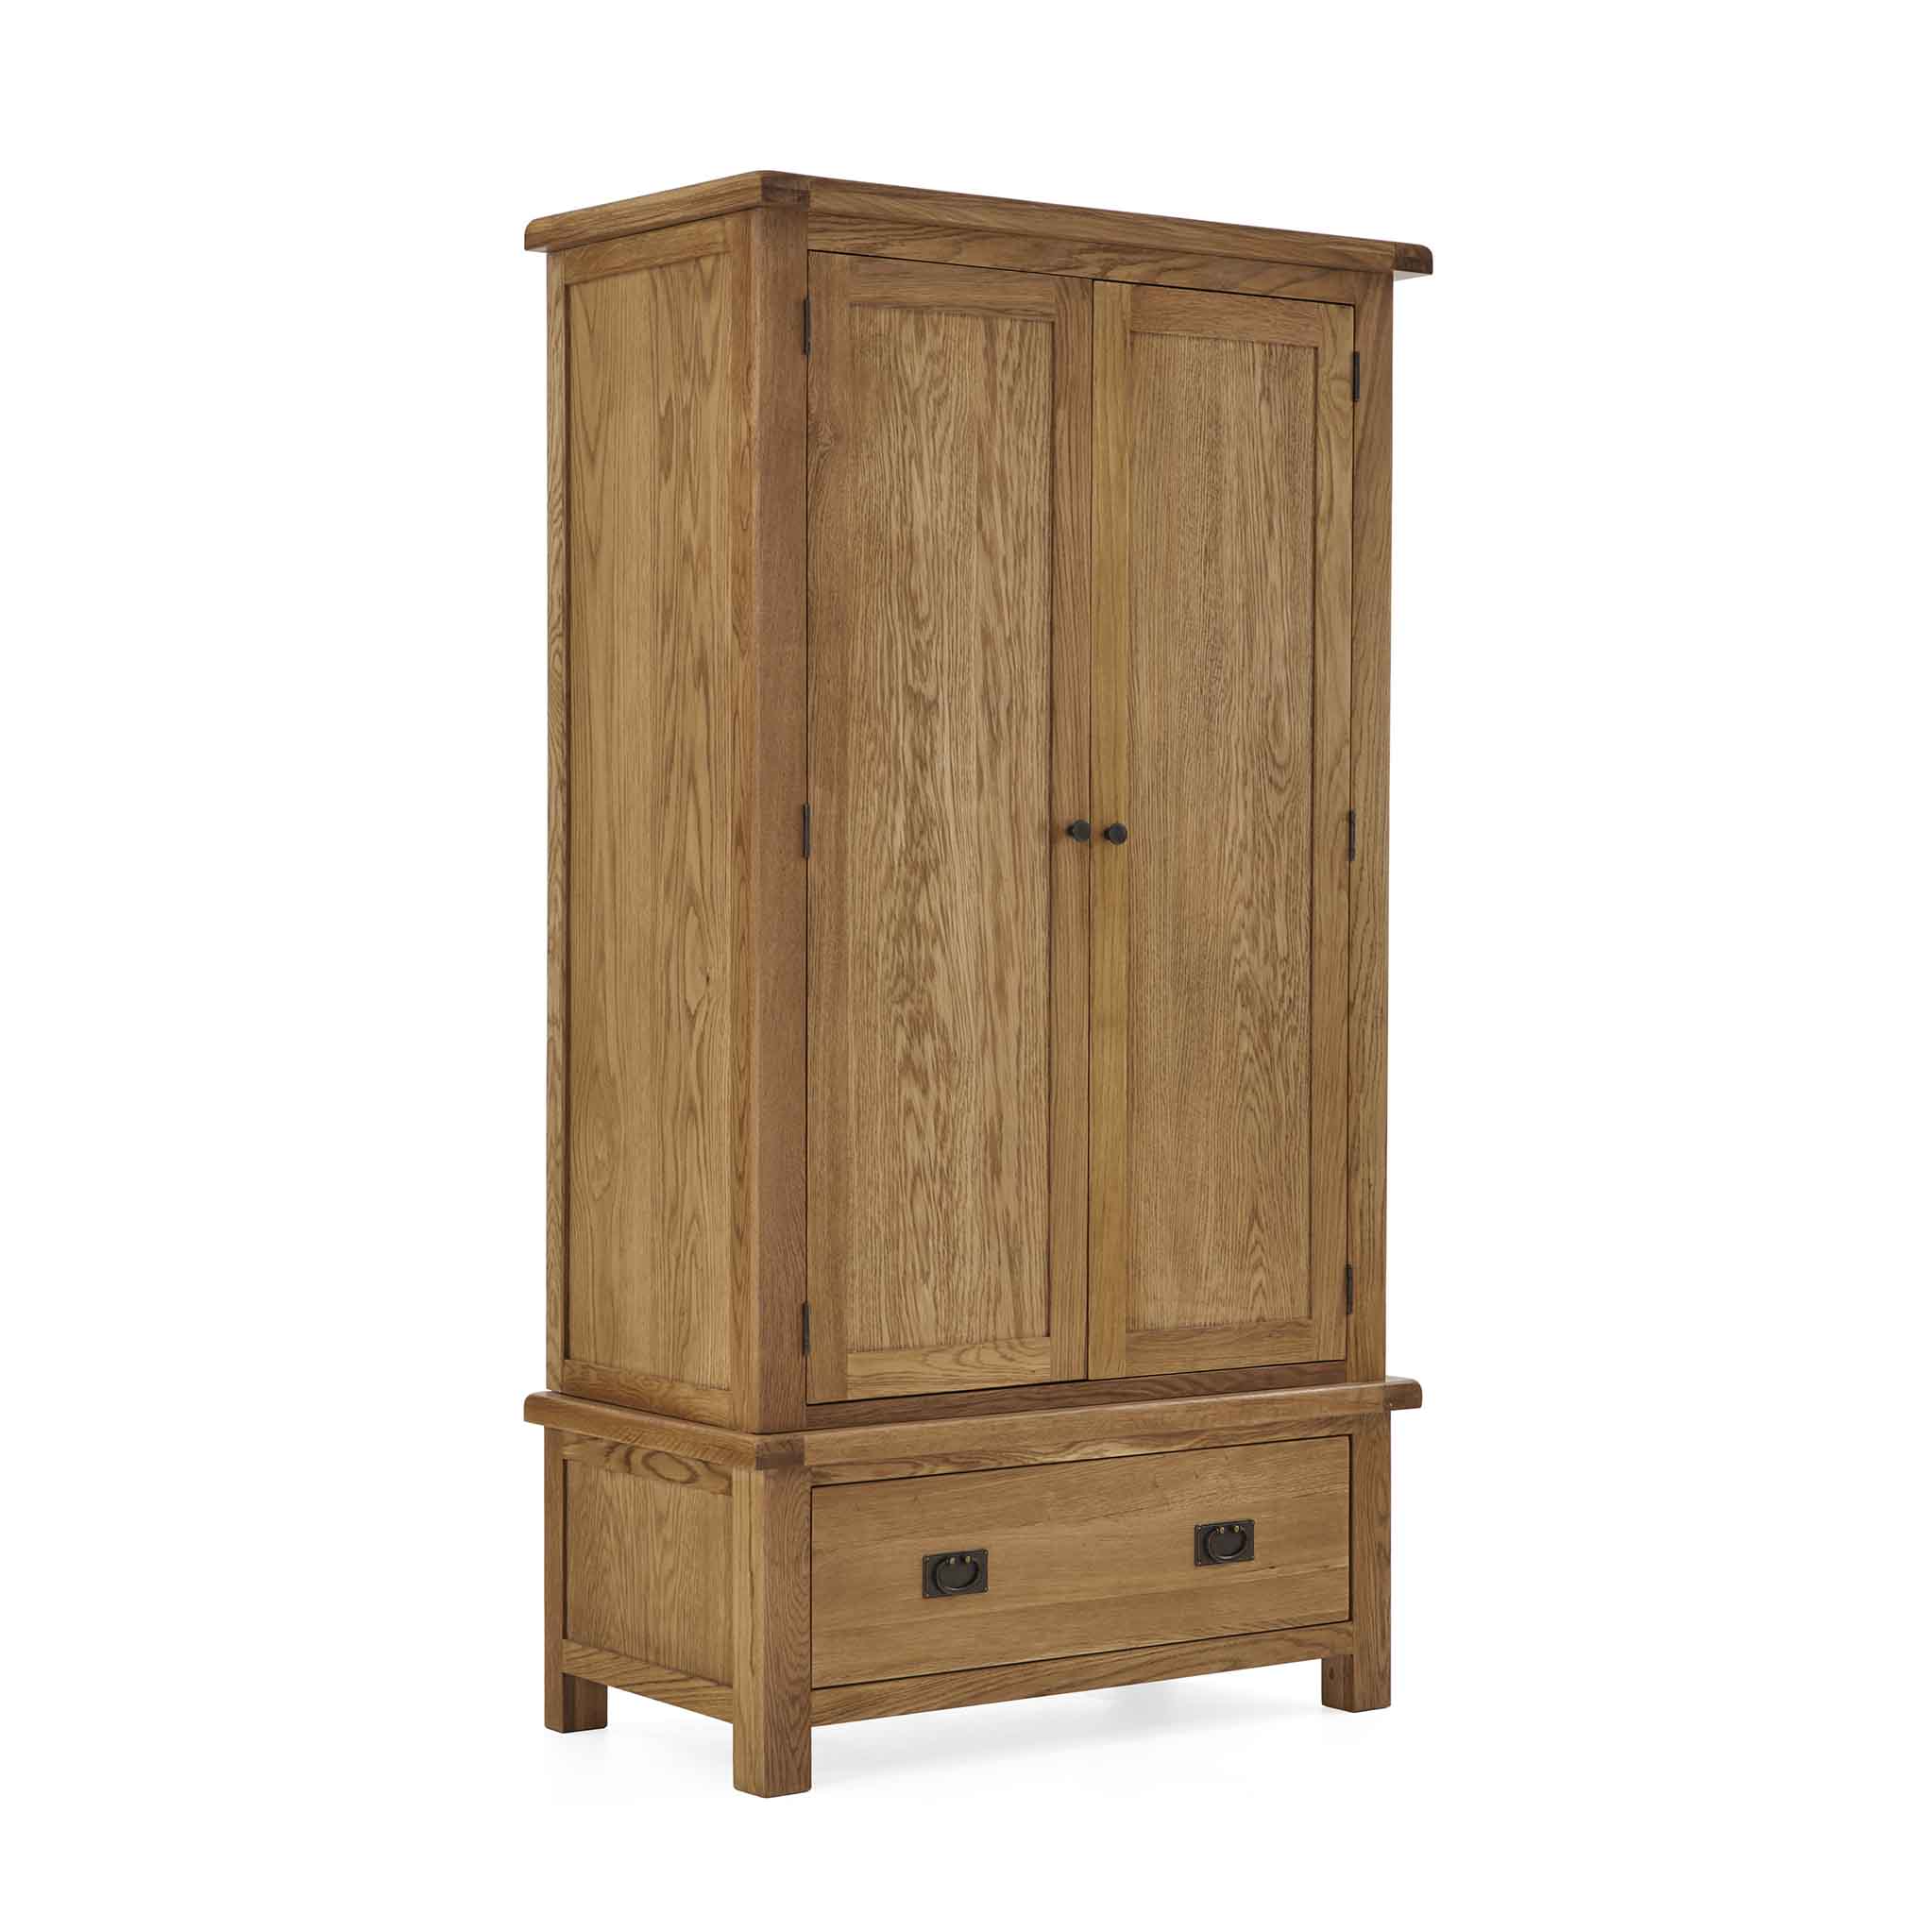 Zelah Oak Double Wardrobe With Drawers Solid Wood Rustic Waxed